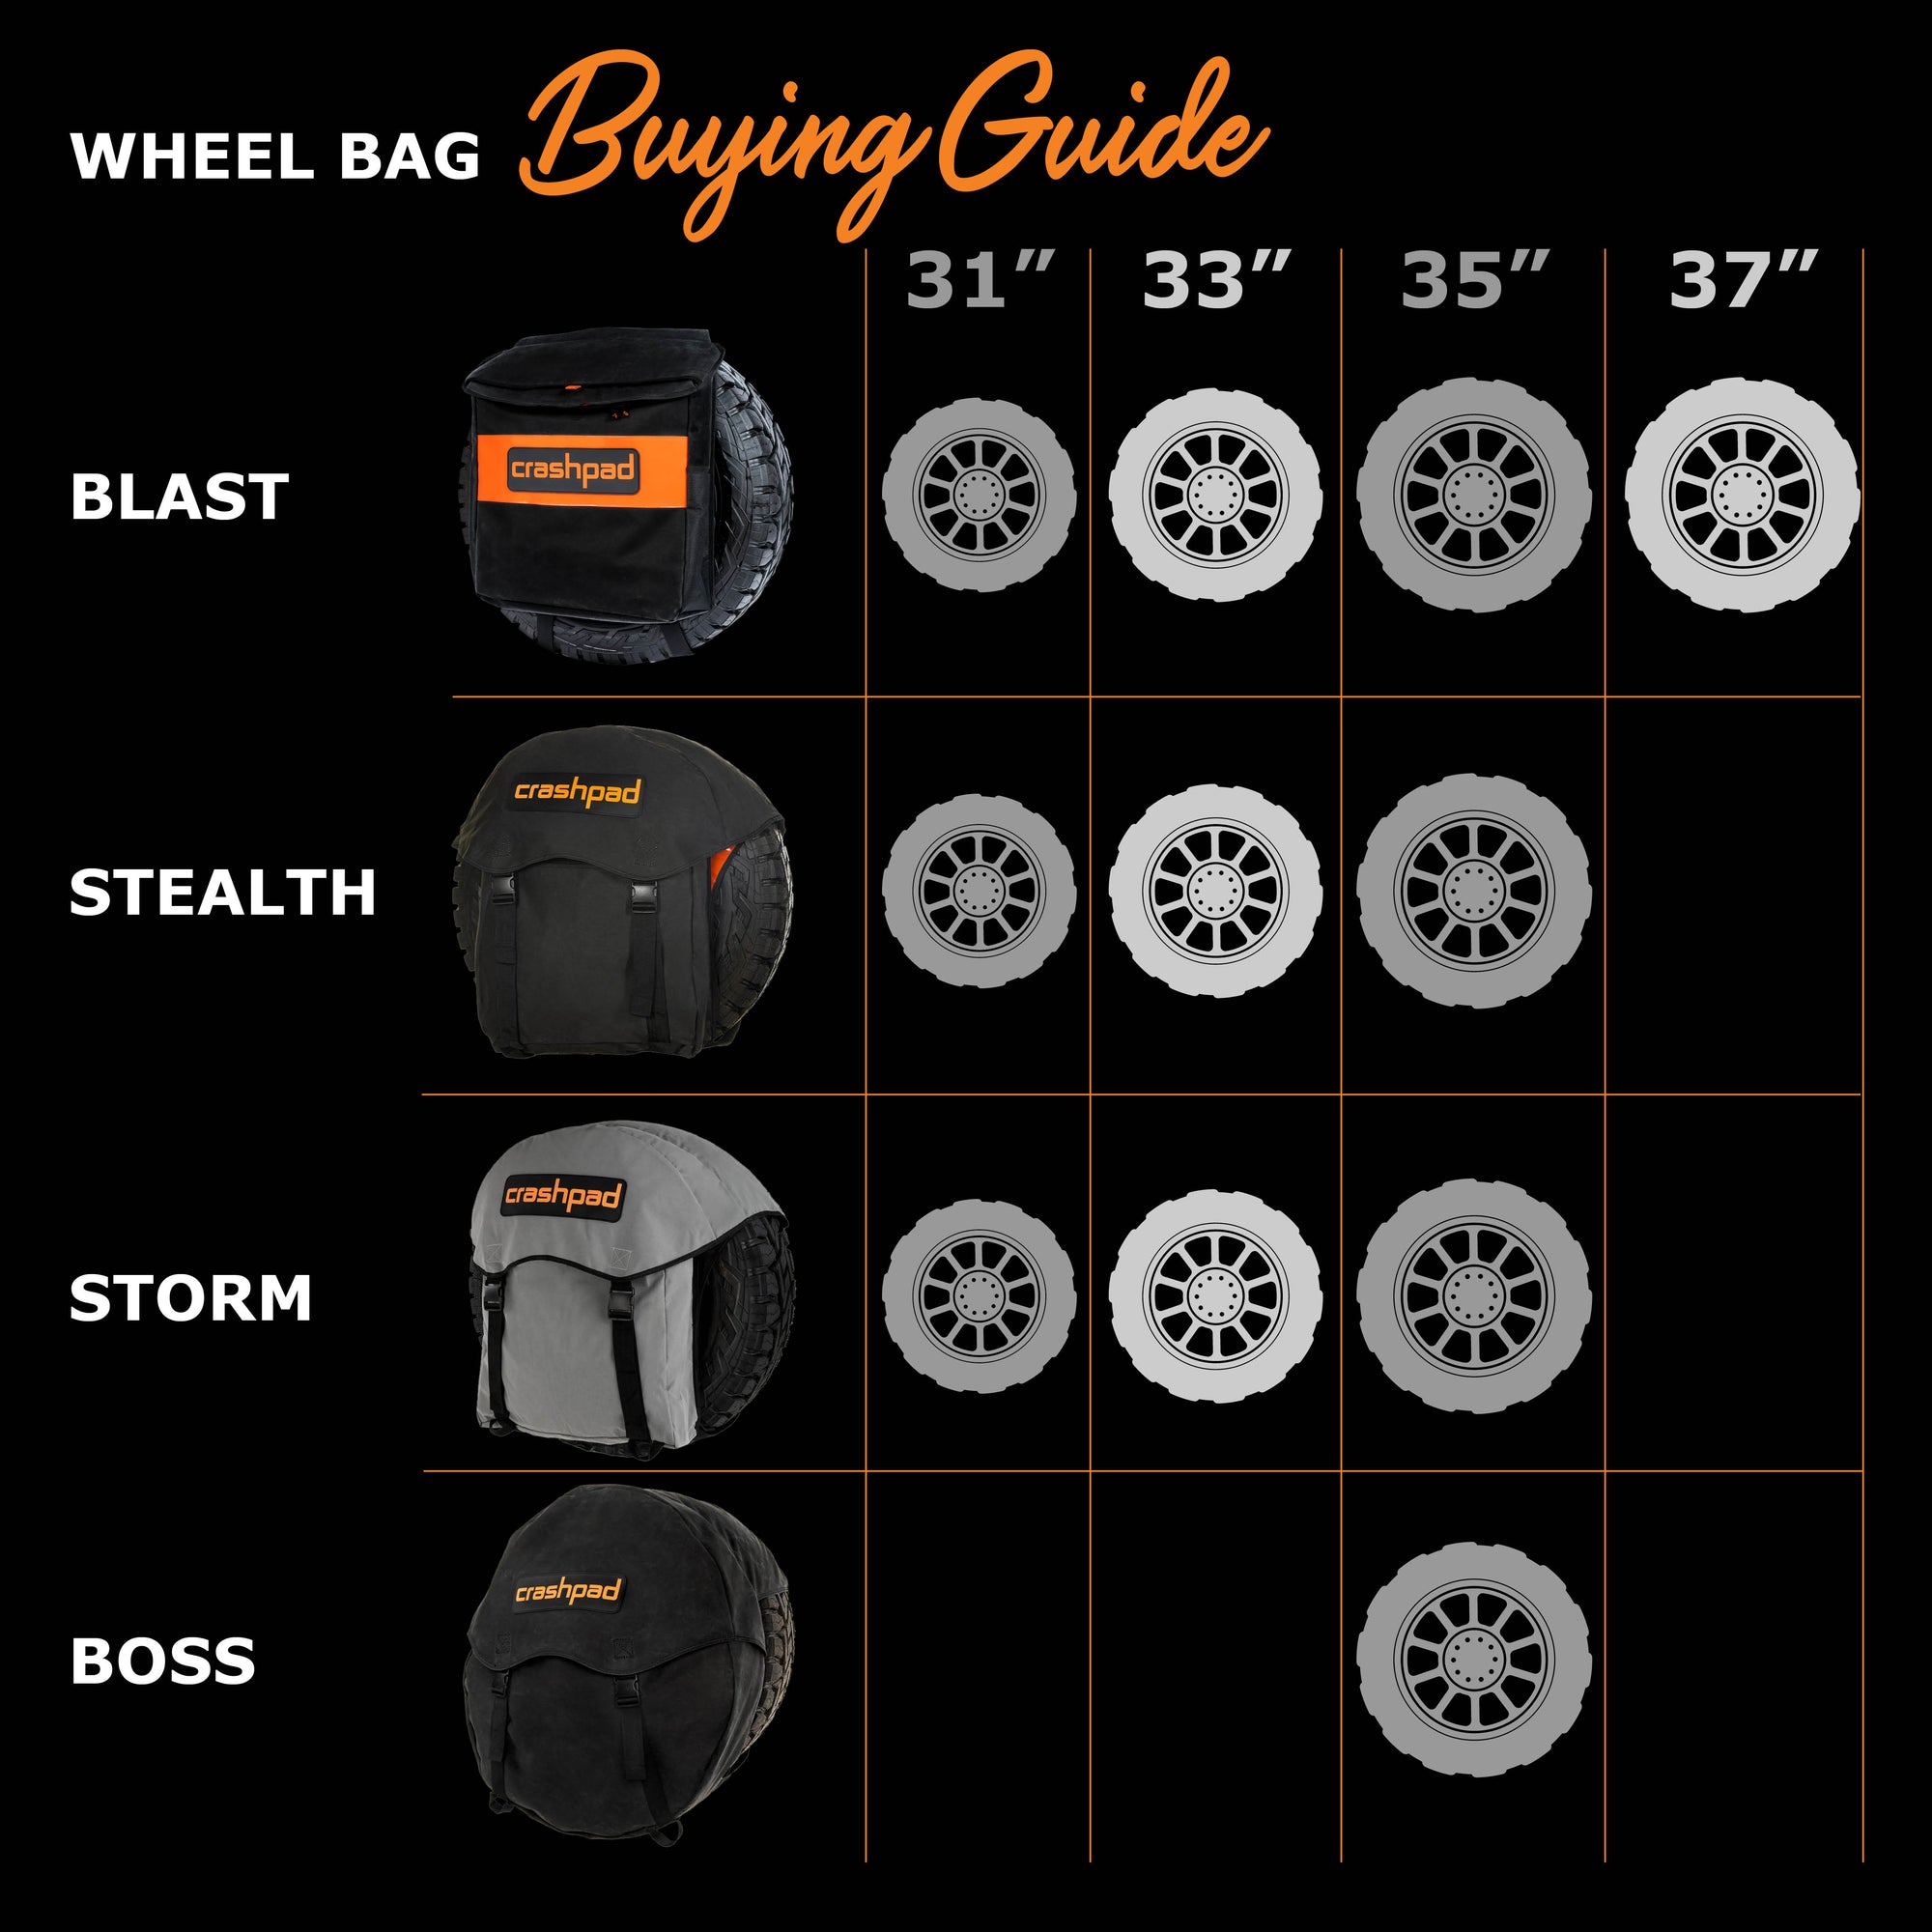 Dirty gear wheel bag